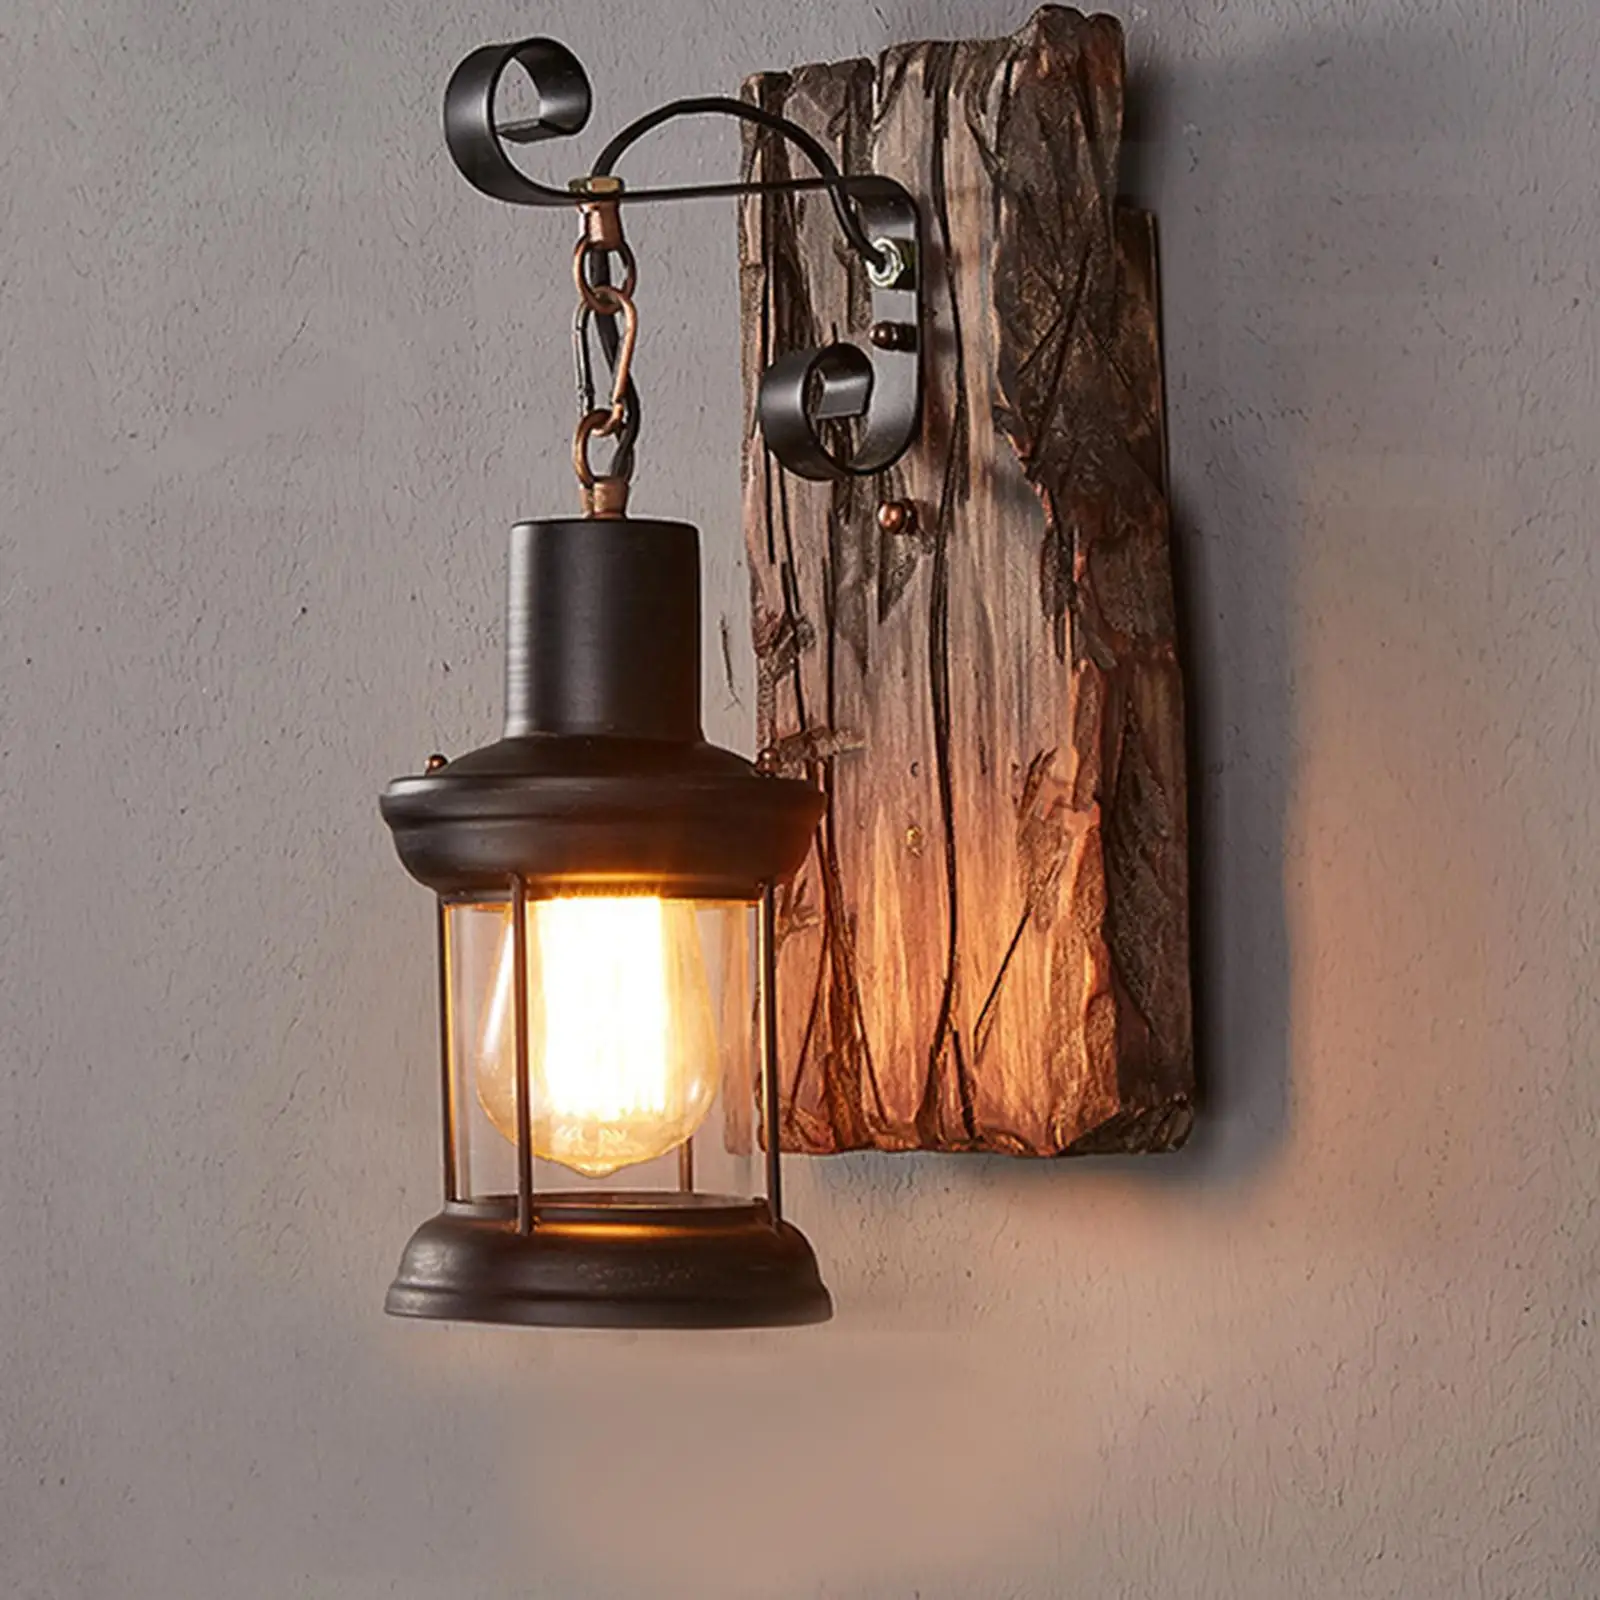 Industrial Wood Wall Sconce Light Bar E27 Rustic Kitchen Corridor Loft Cafe